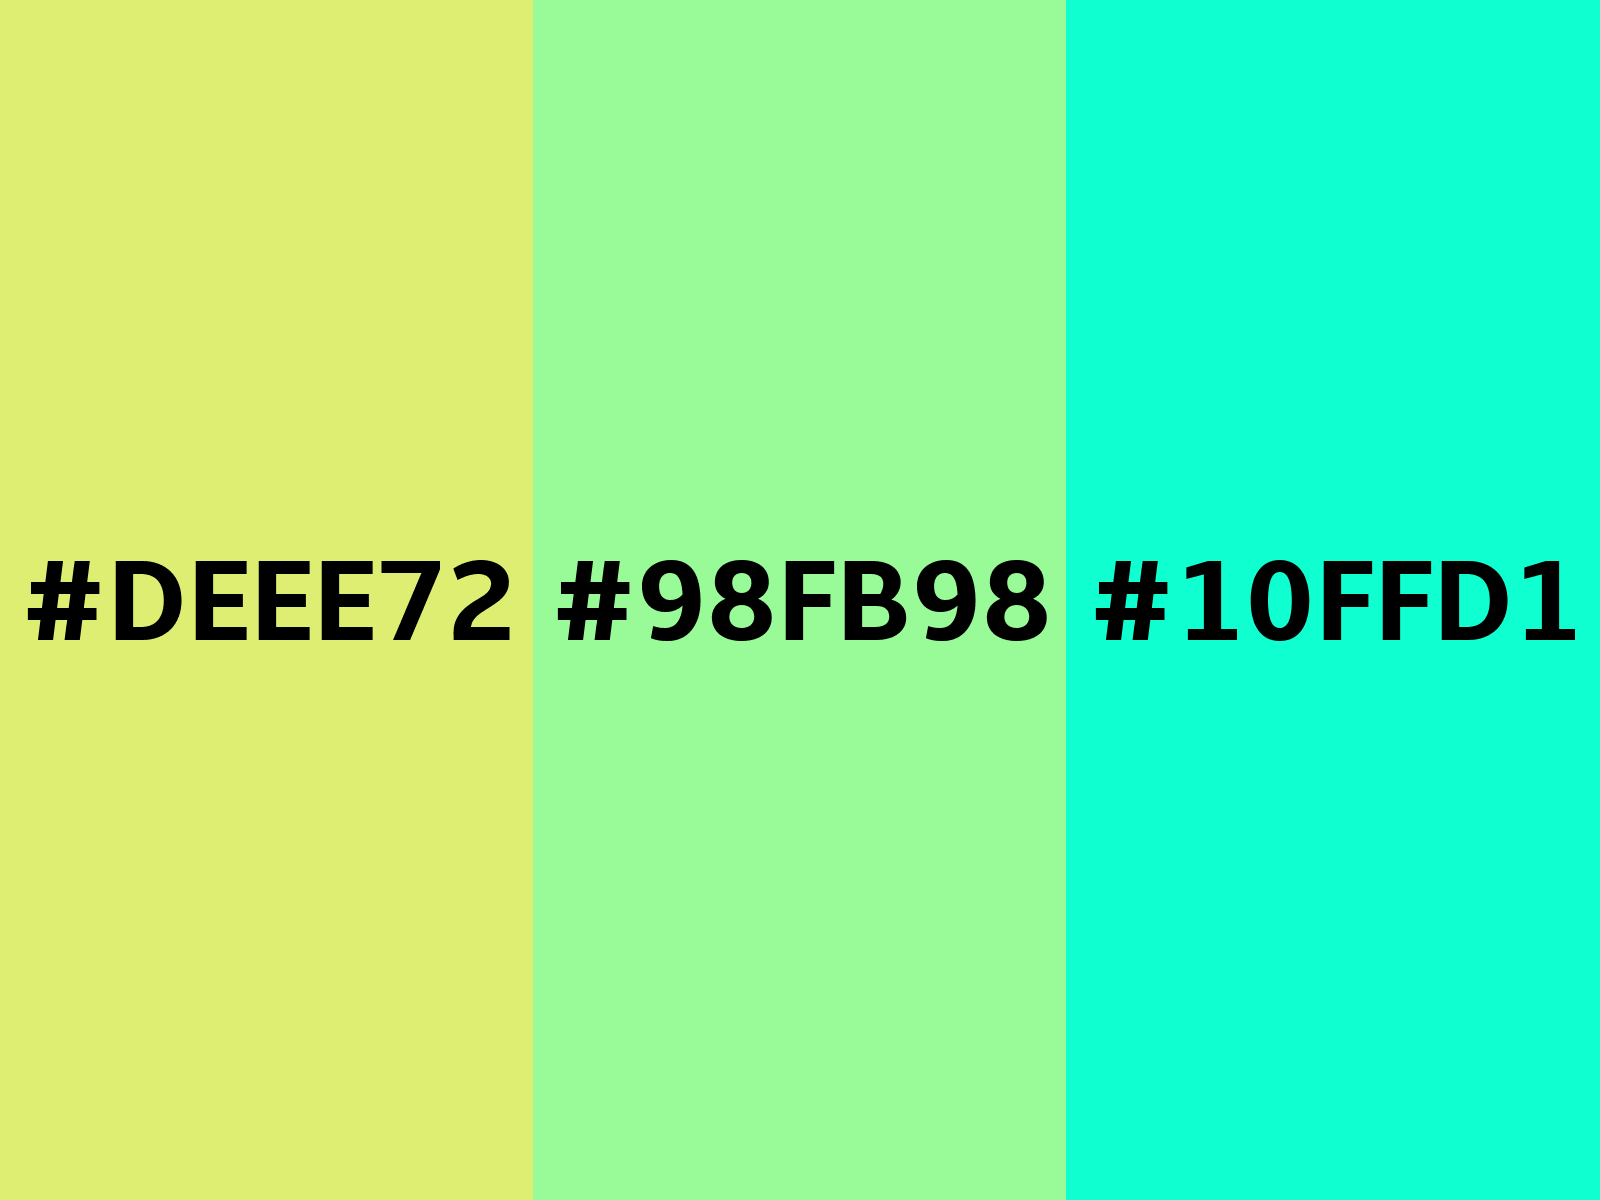 HEX color #264C39, Color name: Bottle Green, RGB(38,76,57), Windows:  3755046. - HTML CSS Color